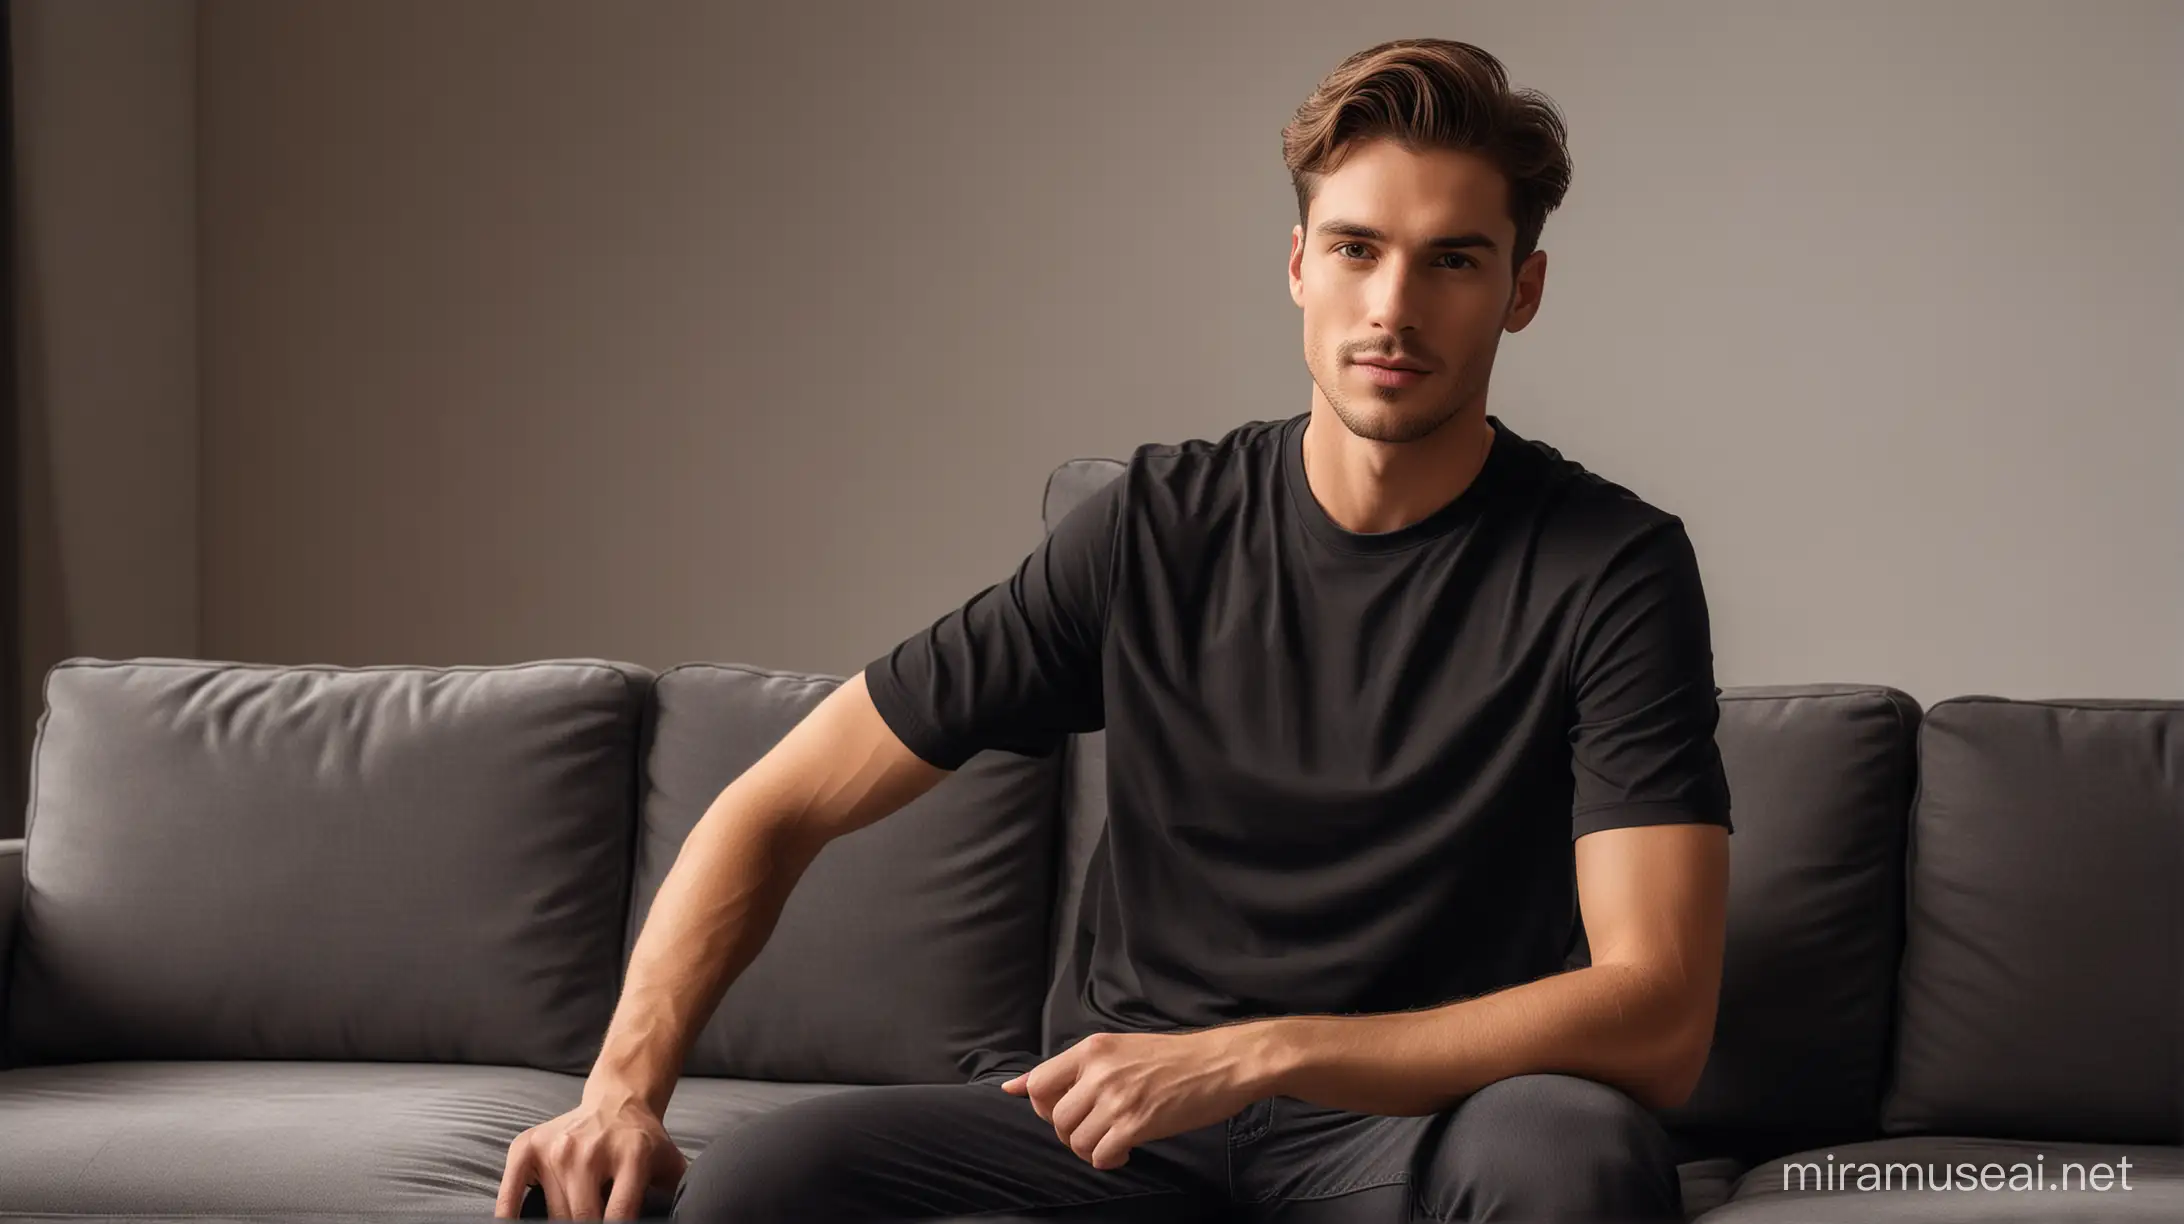 Stylish Male Model Showcasing TShirt Brand in Home Setting